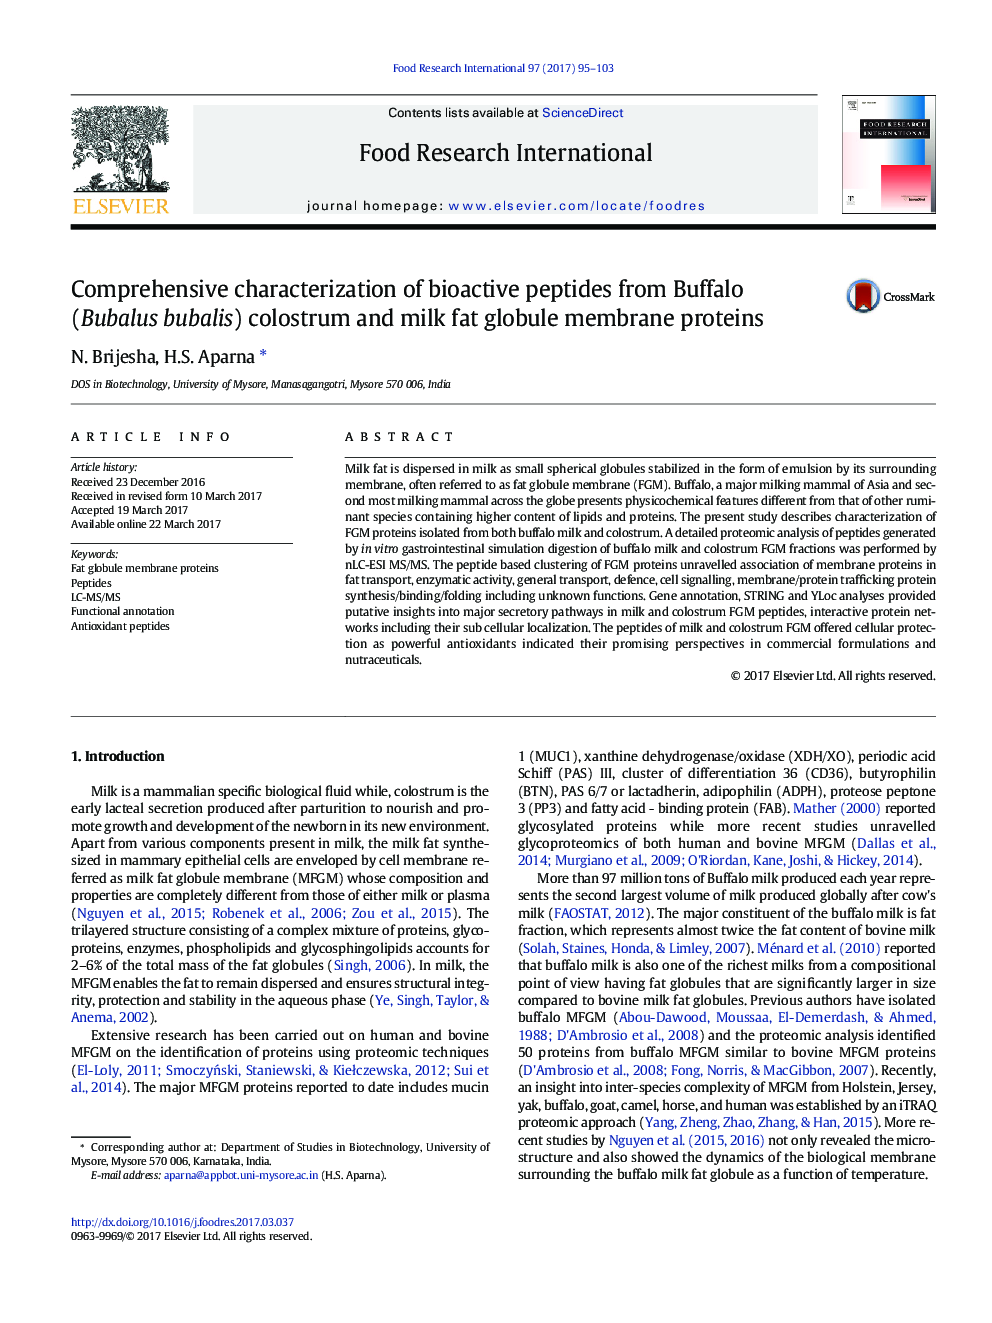 Comprehensive characterization of bioactive peptides from Buffalo (Bubalus bubalis) colostrum and milk fat globule membrane proteins